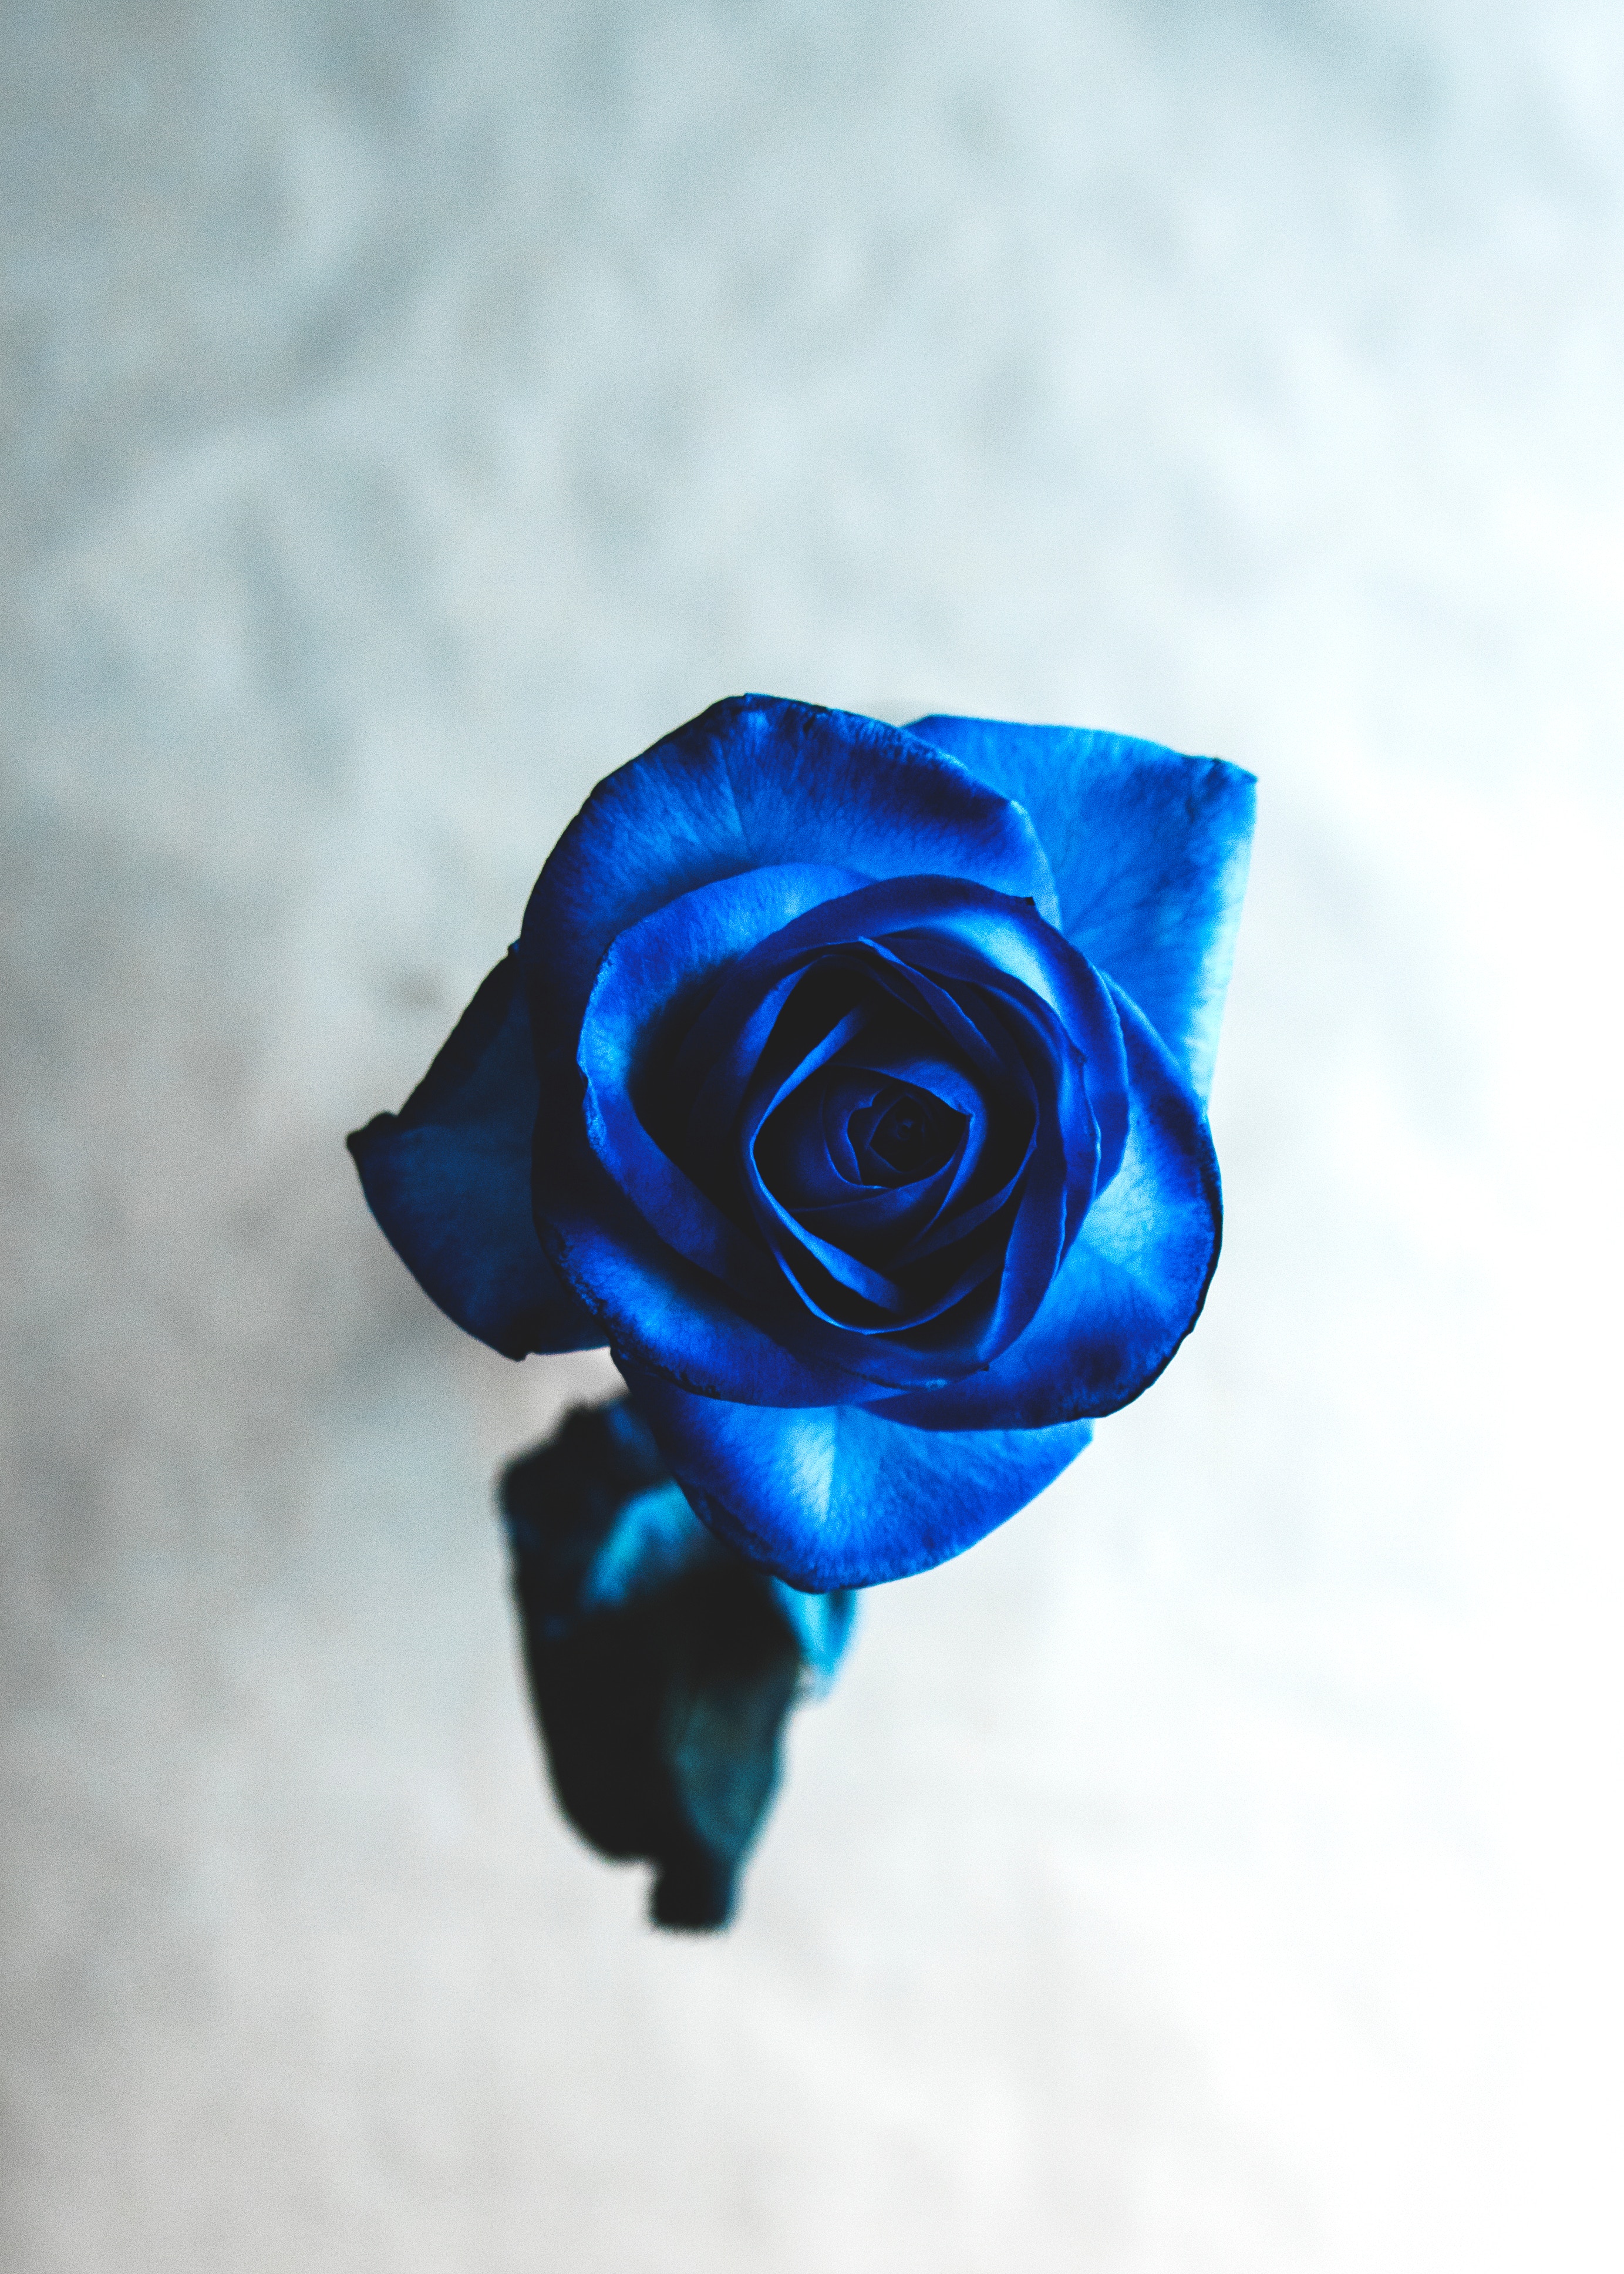 rose flower, blur, flowers, blue, flower, rose, bud, smooth